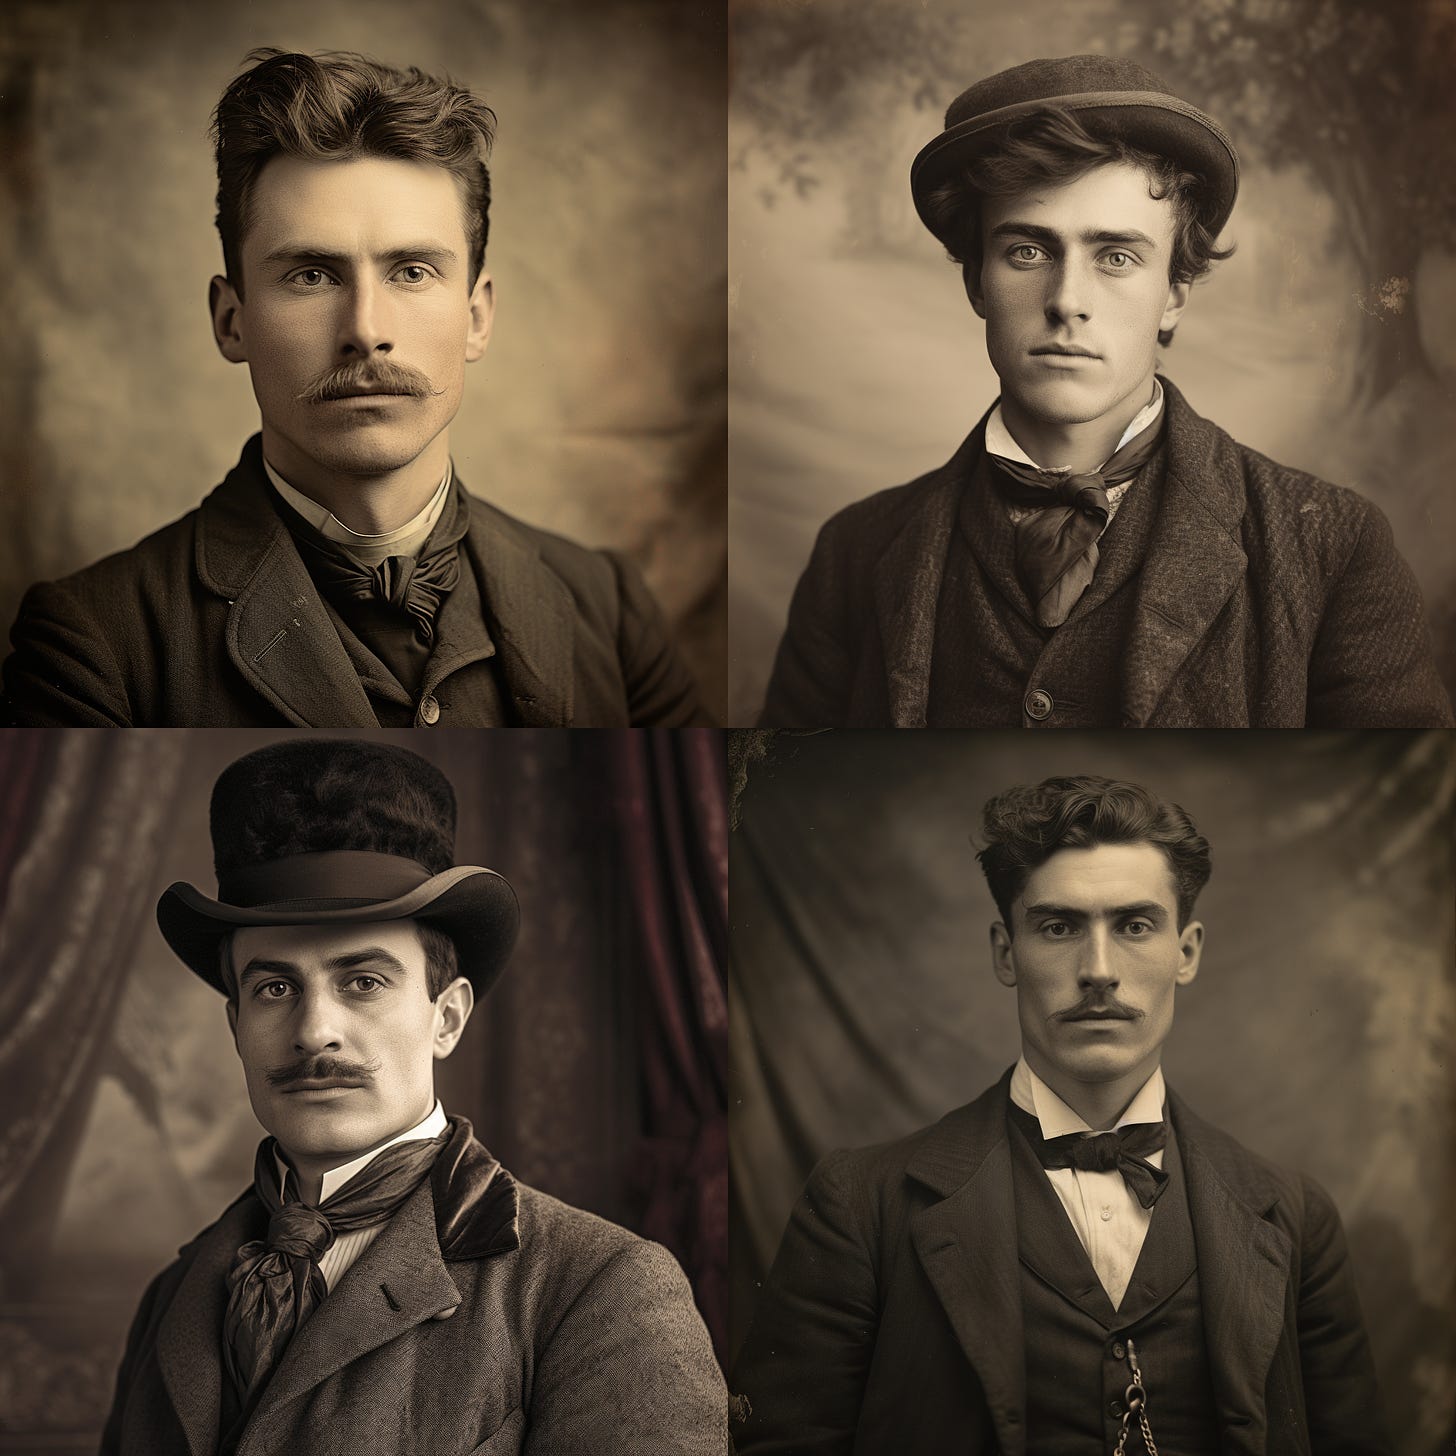 4-image grid of Victorian men, vintage photos, in Midjourney